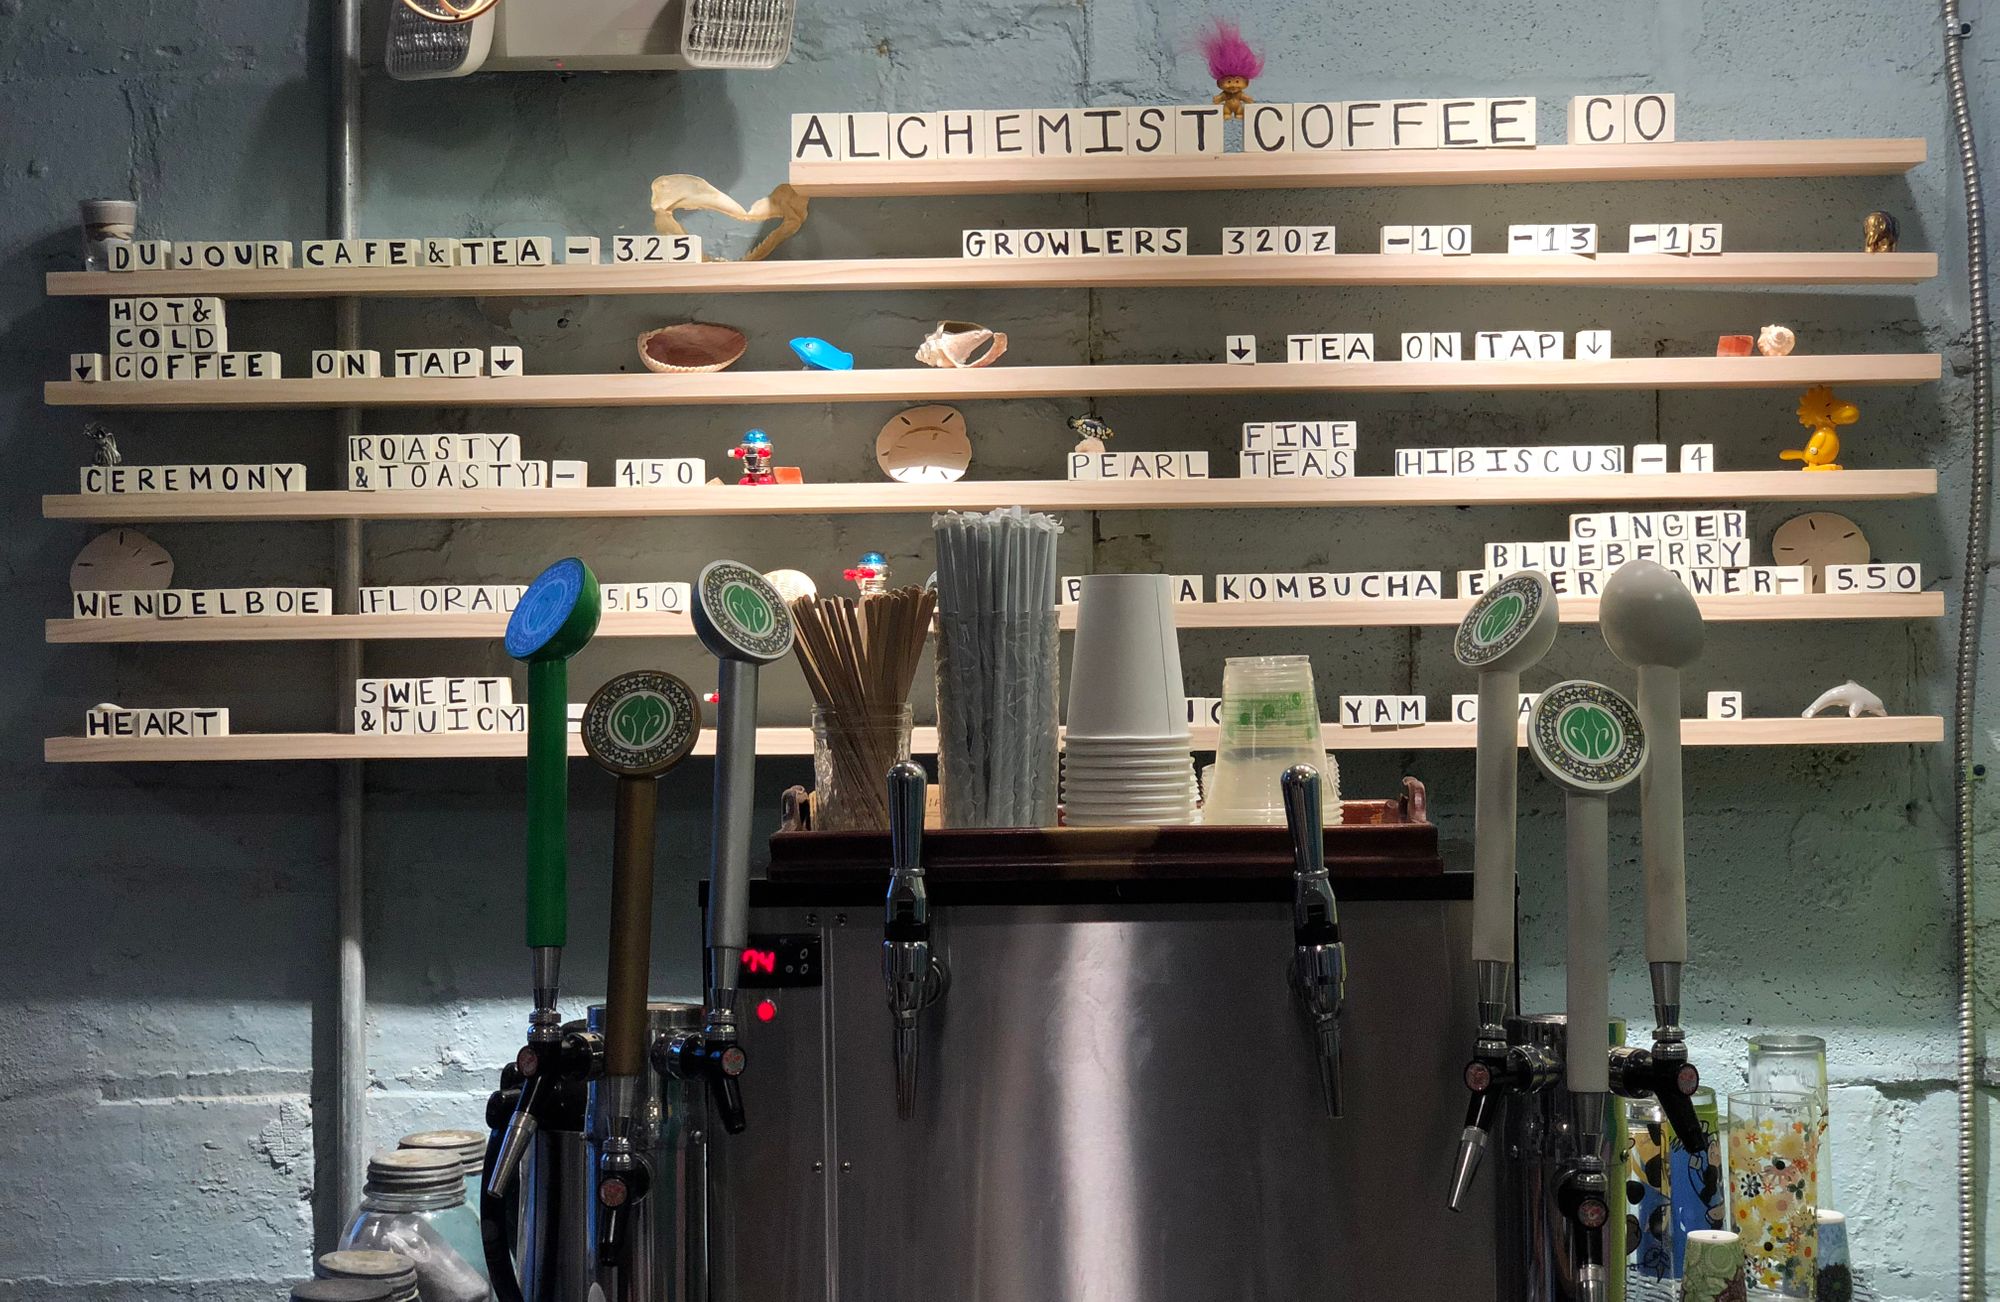 Inside the nitro coffee revolution brewing in Washington, D.C.